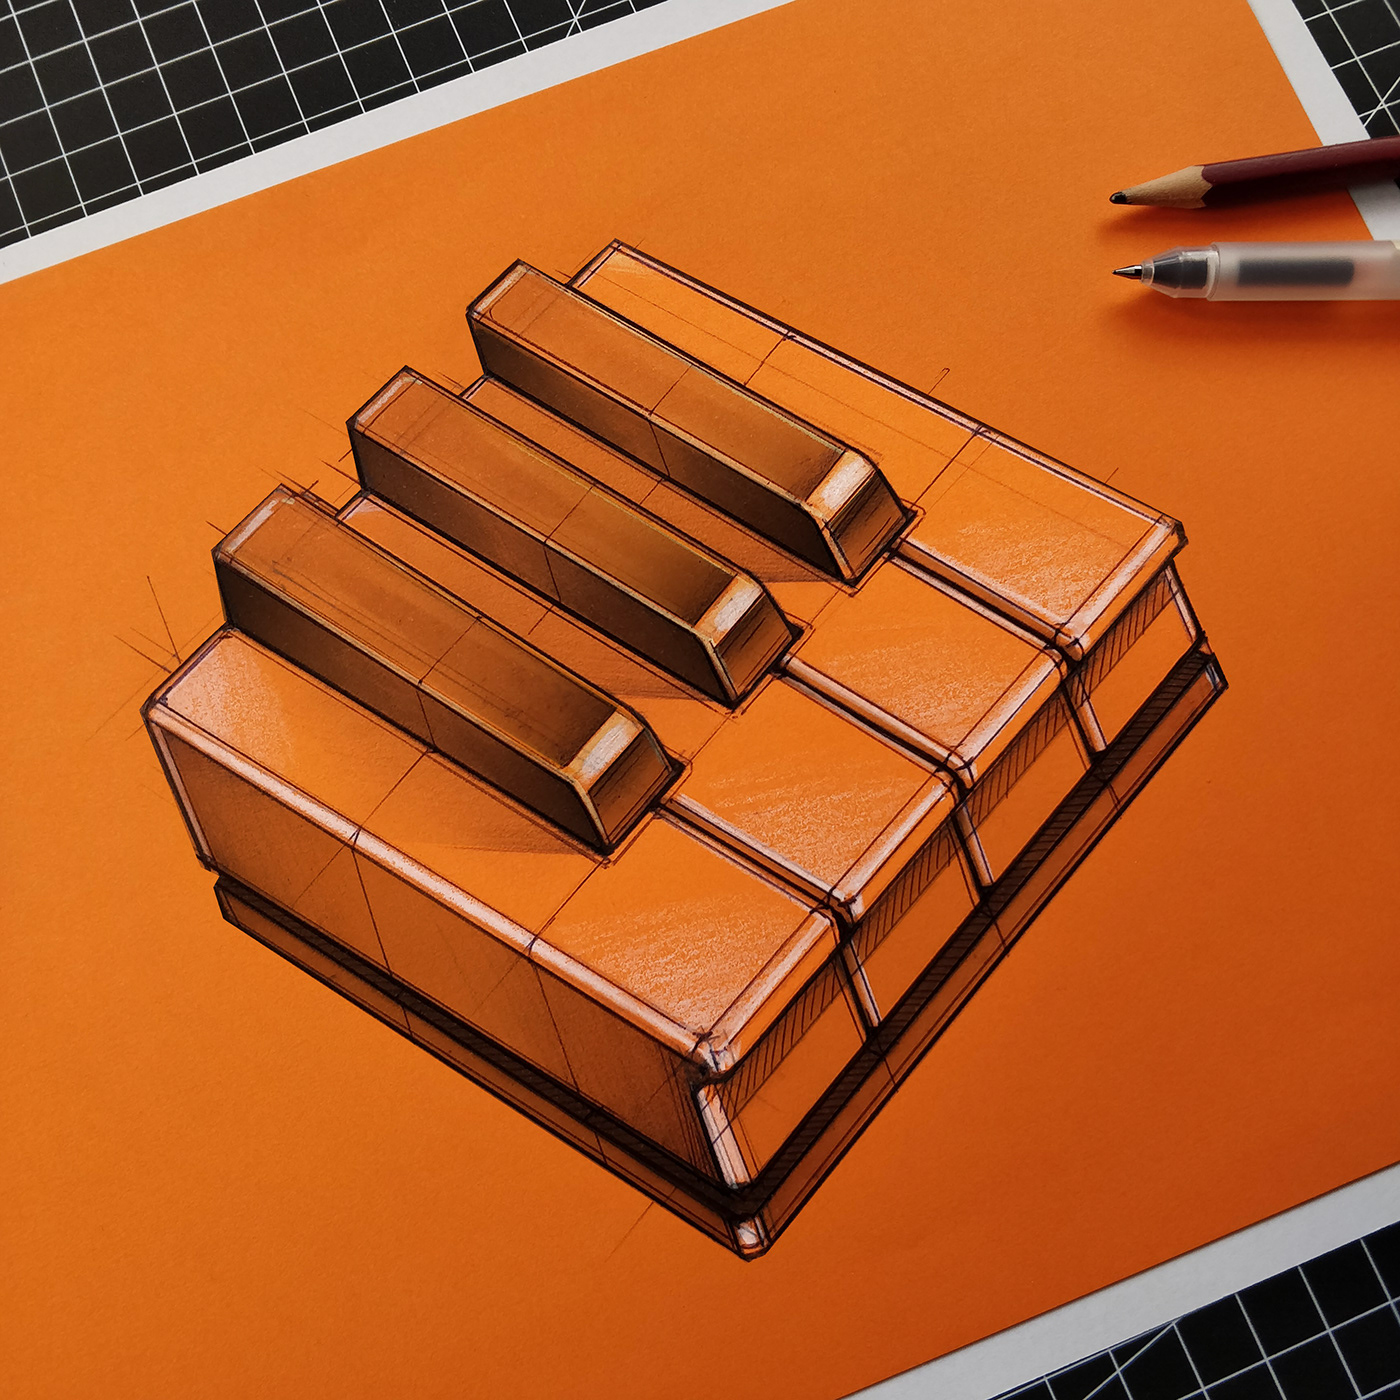 Drawing  idsketch industrialdesign product productdesign scribble sketch sketchbook skizze technical